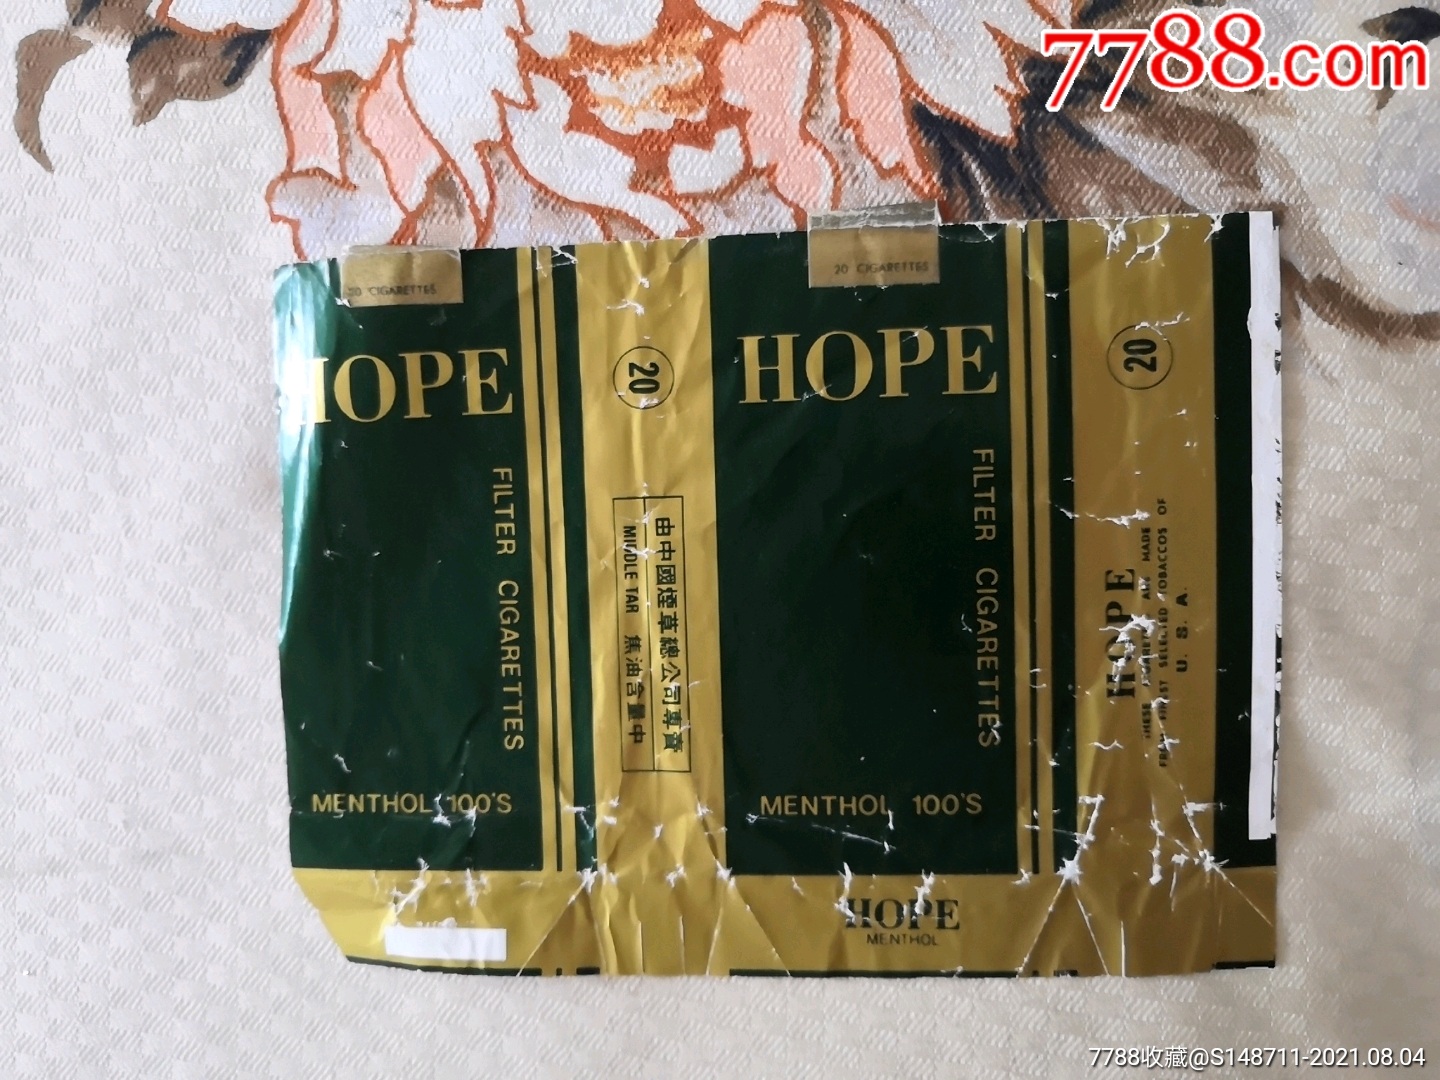 hope混合型香烟